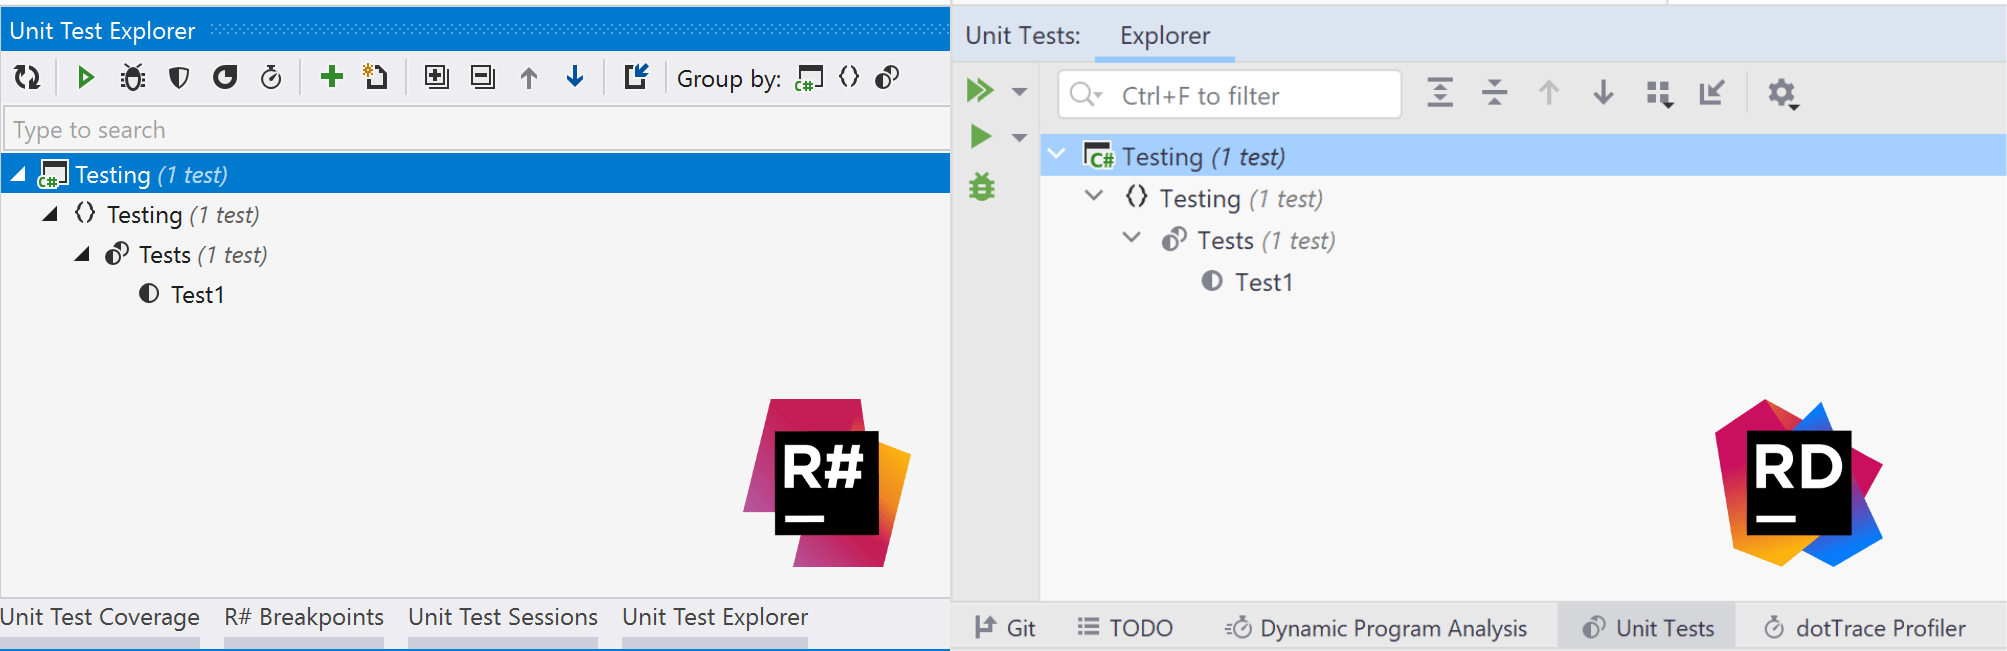 Comparison between Unit Test Explorer windows and Rider Unit Tests